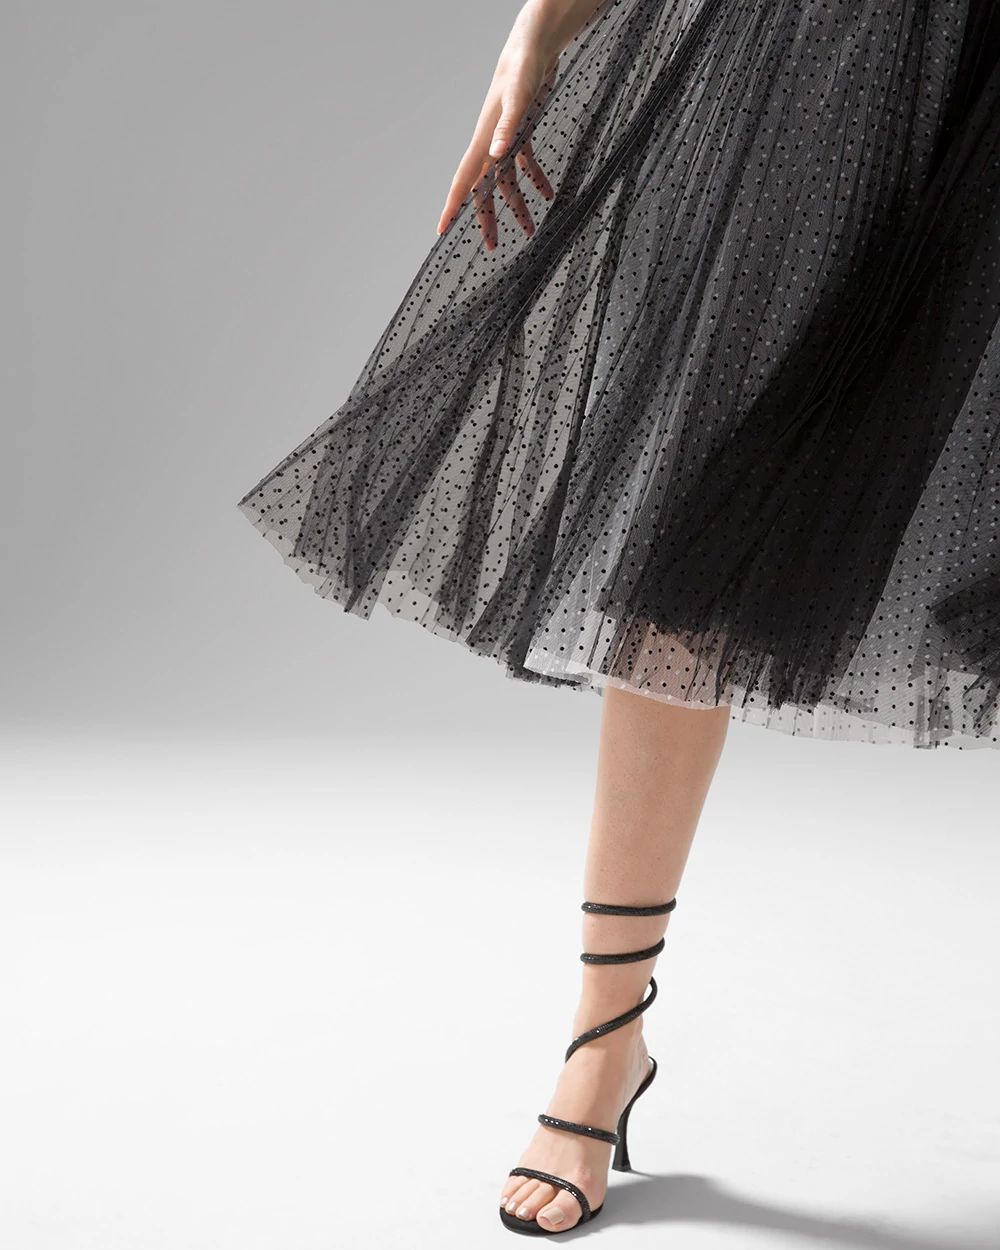 Petite Strapless Velvet & Dot Dress click to view larger image.